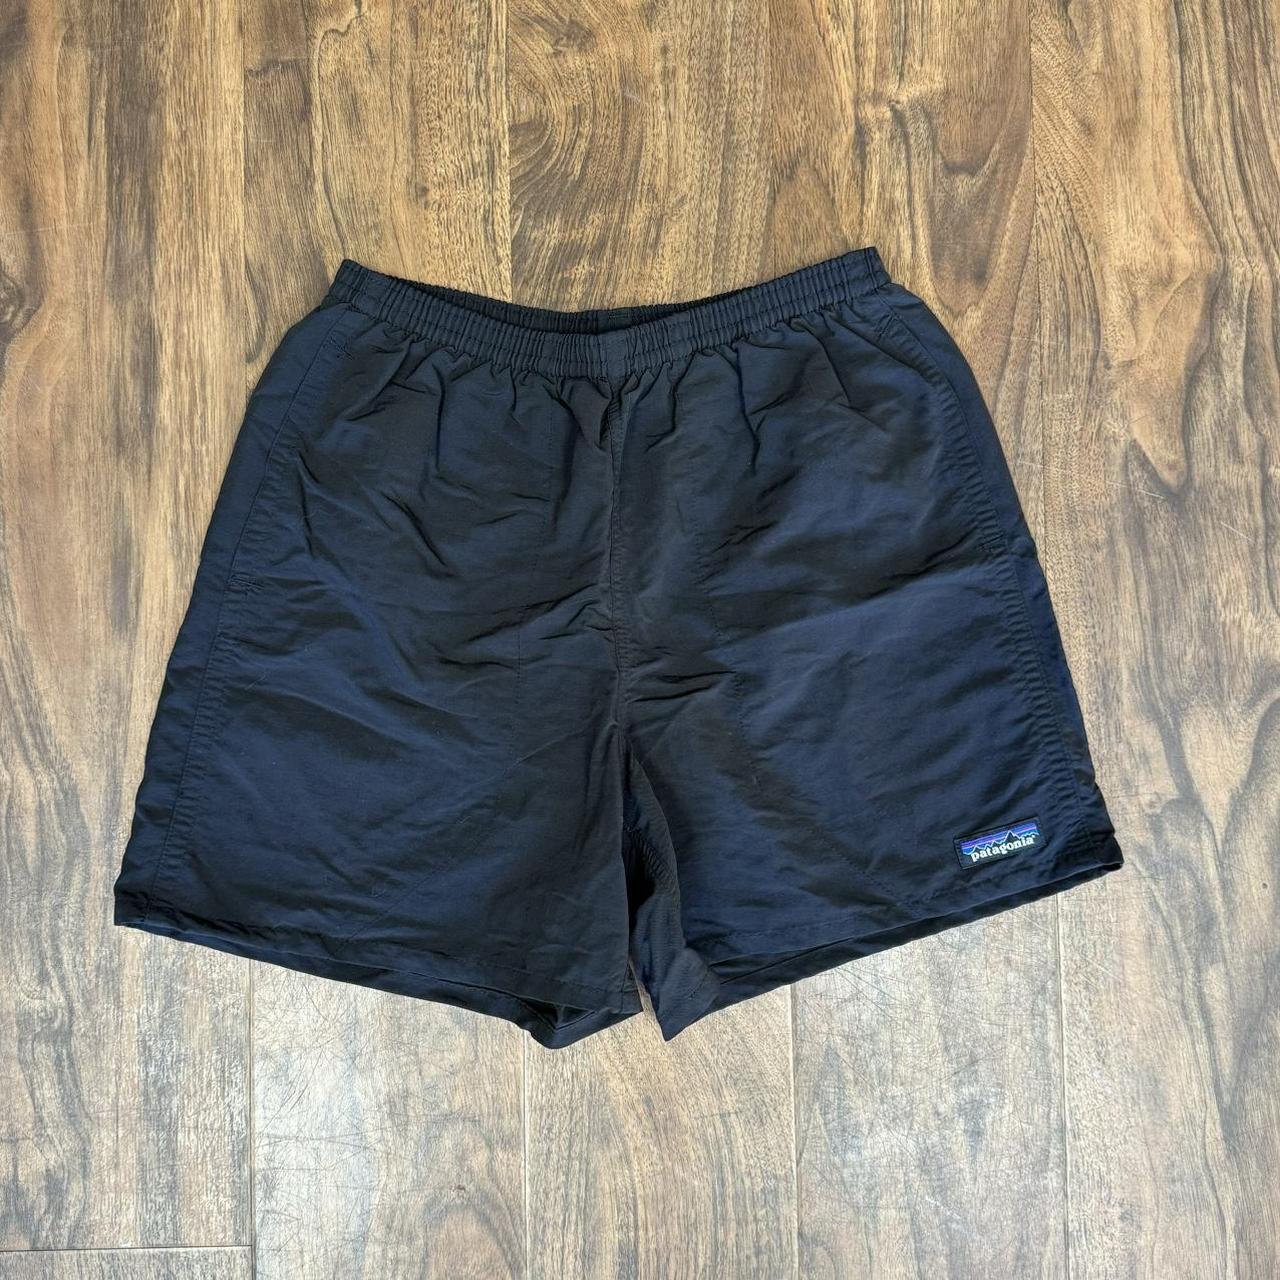 Black Patagonia Shorts 7 inch inseam - Depop